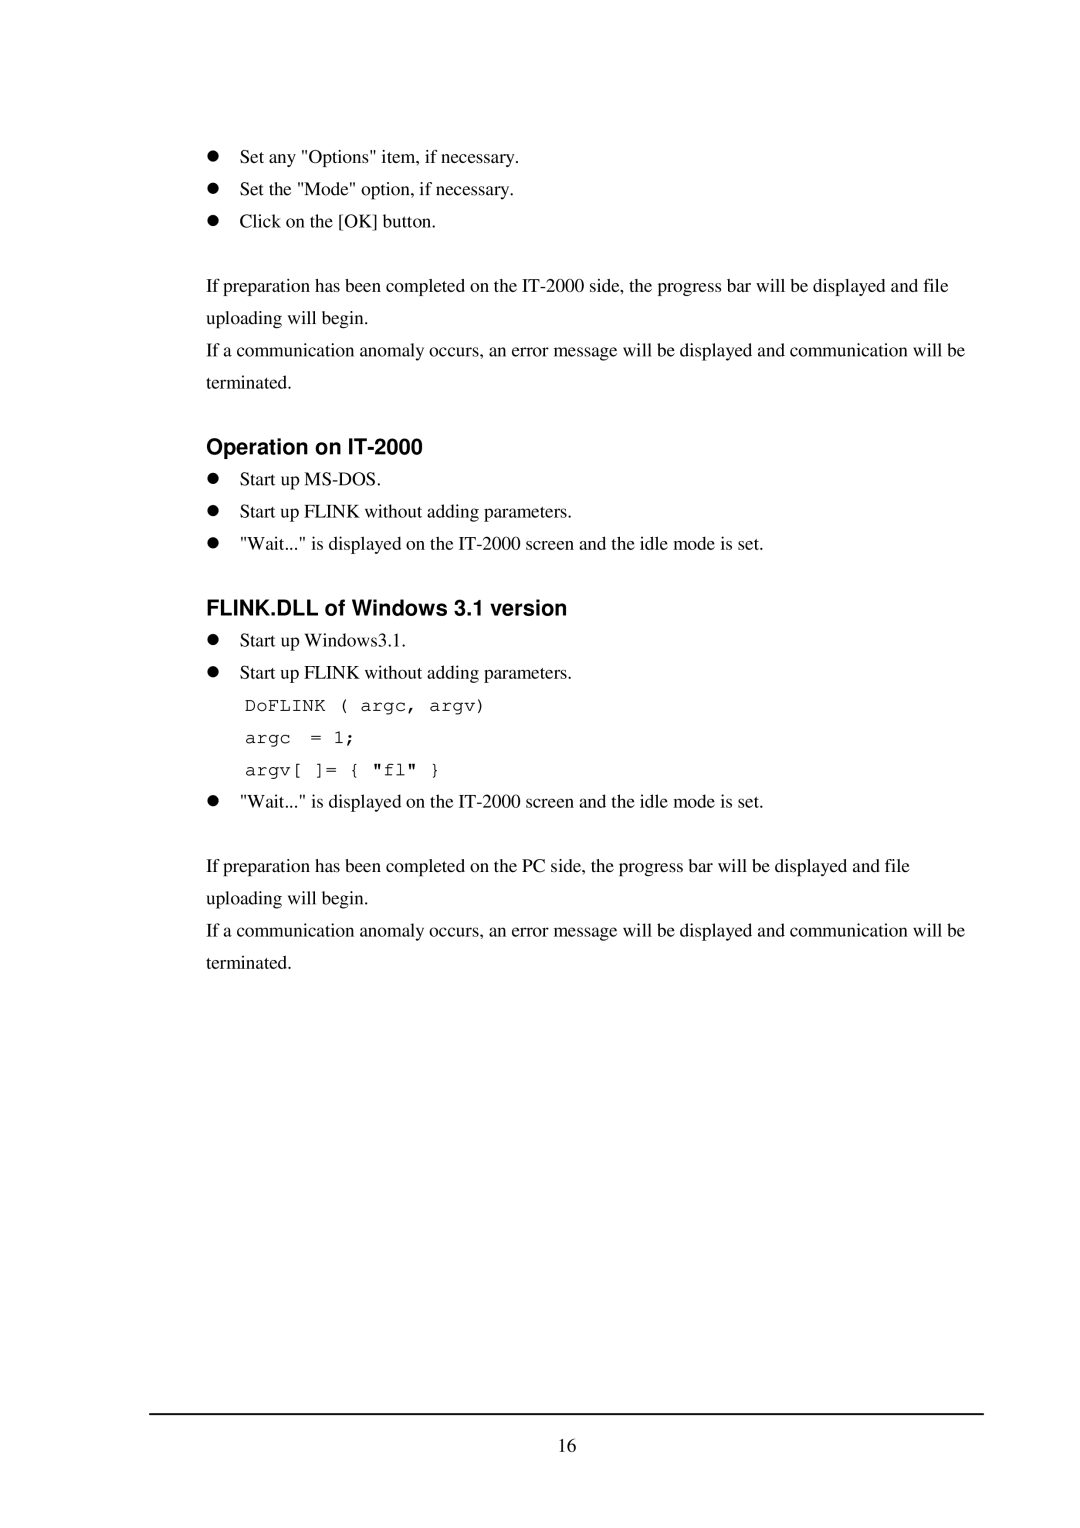 Casio installation manual Operation on IT-2000, FLINK.DLL of Windows 3.1 version, DoFLINK argc, argv argc = argv = fl 